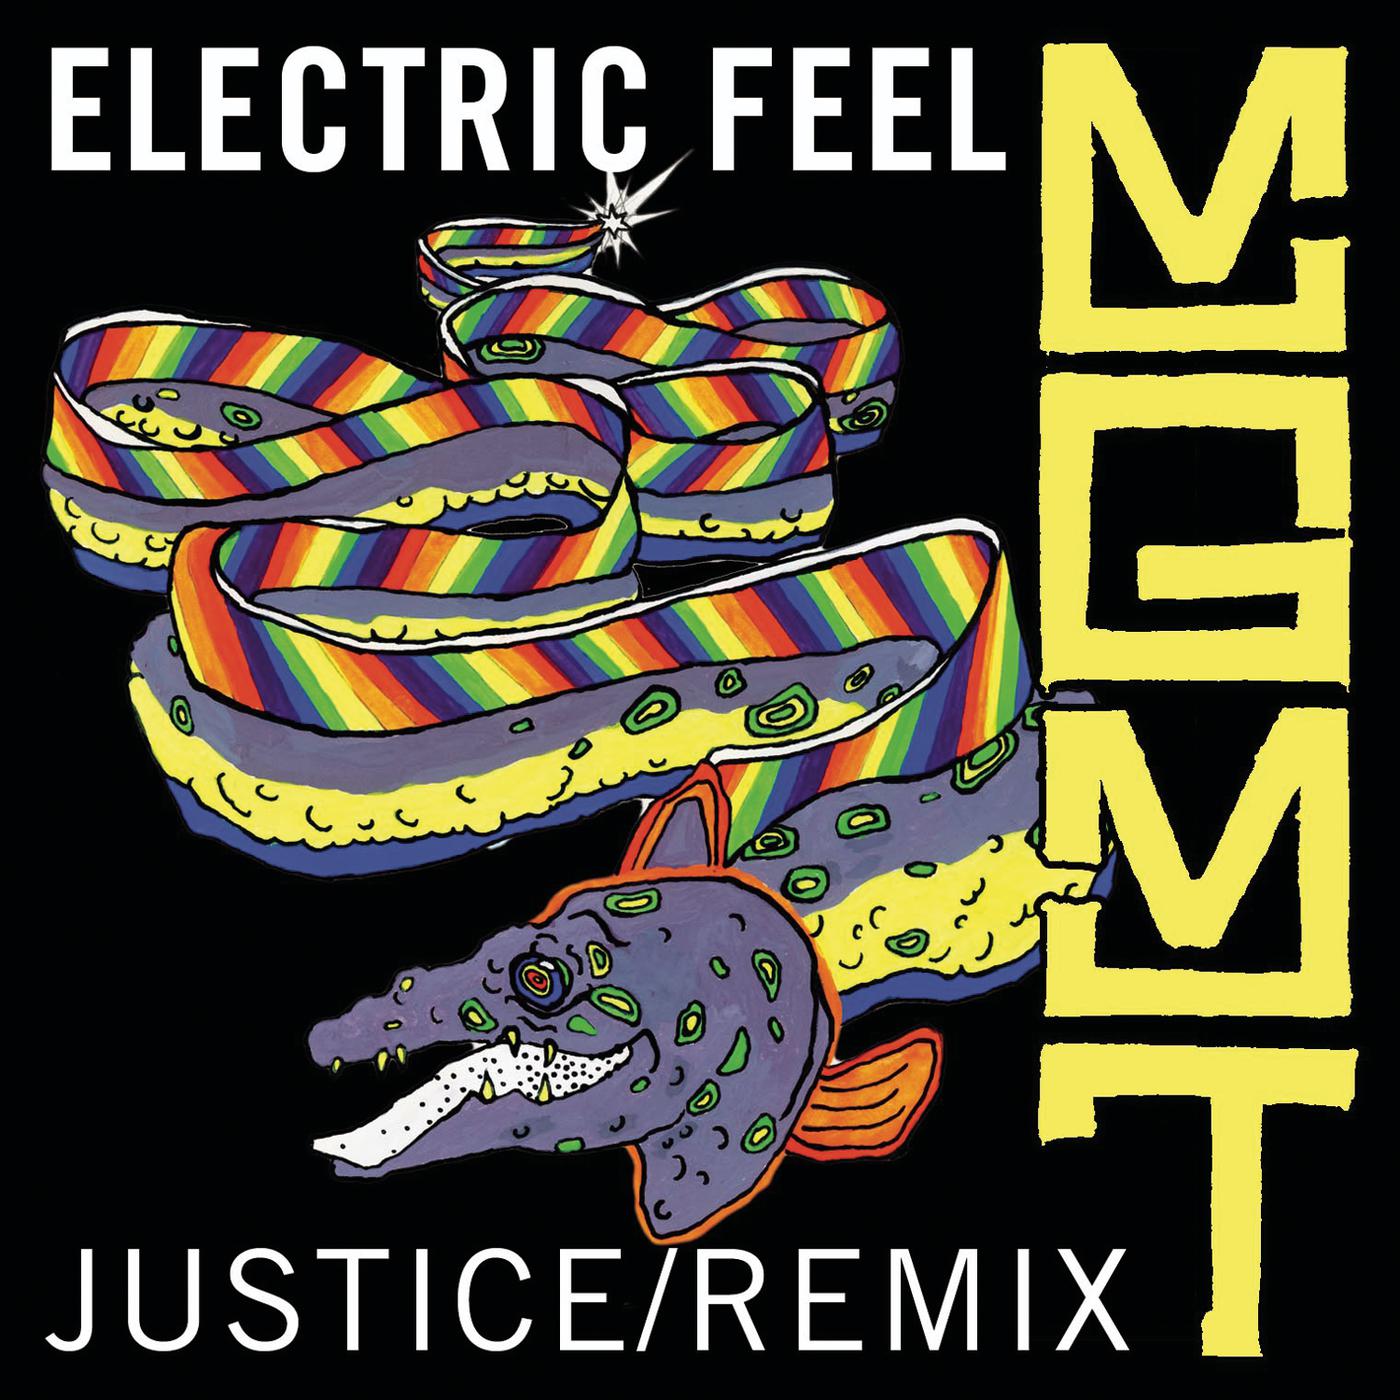 Feeling electric. MGMT обложка. MGMT альбом. MGMT Electric feel. MGMT обложки альбомов.